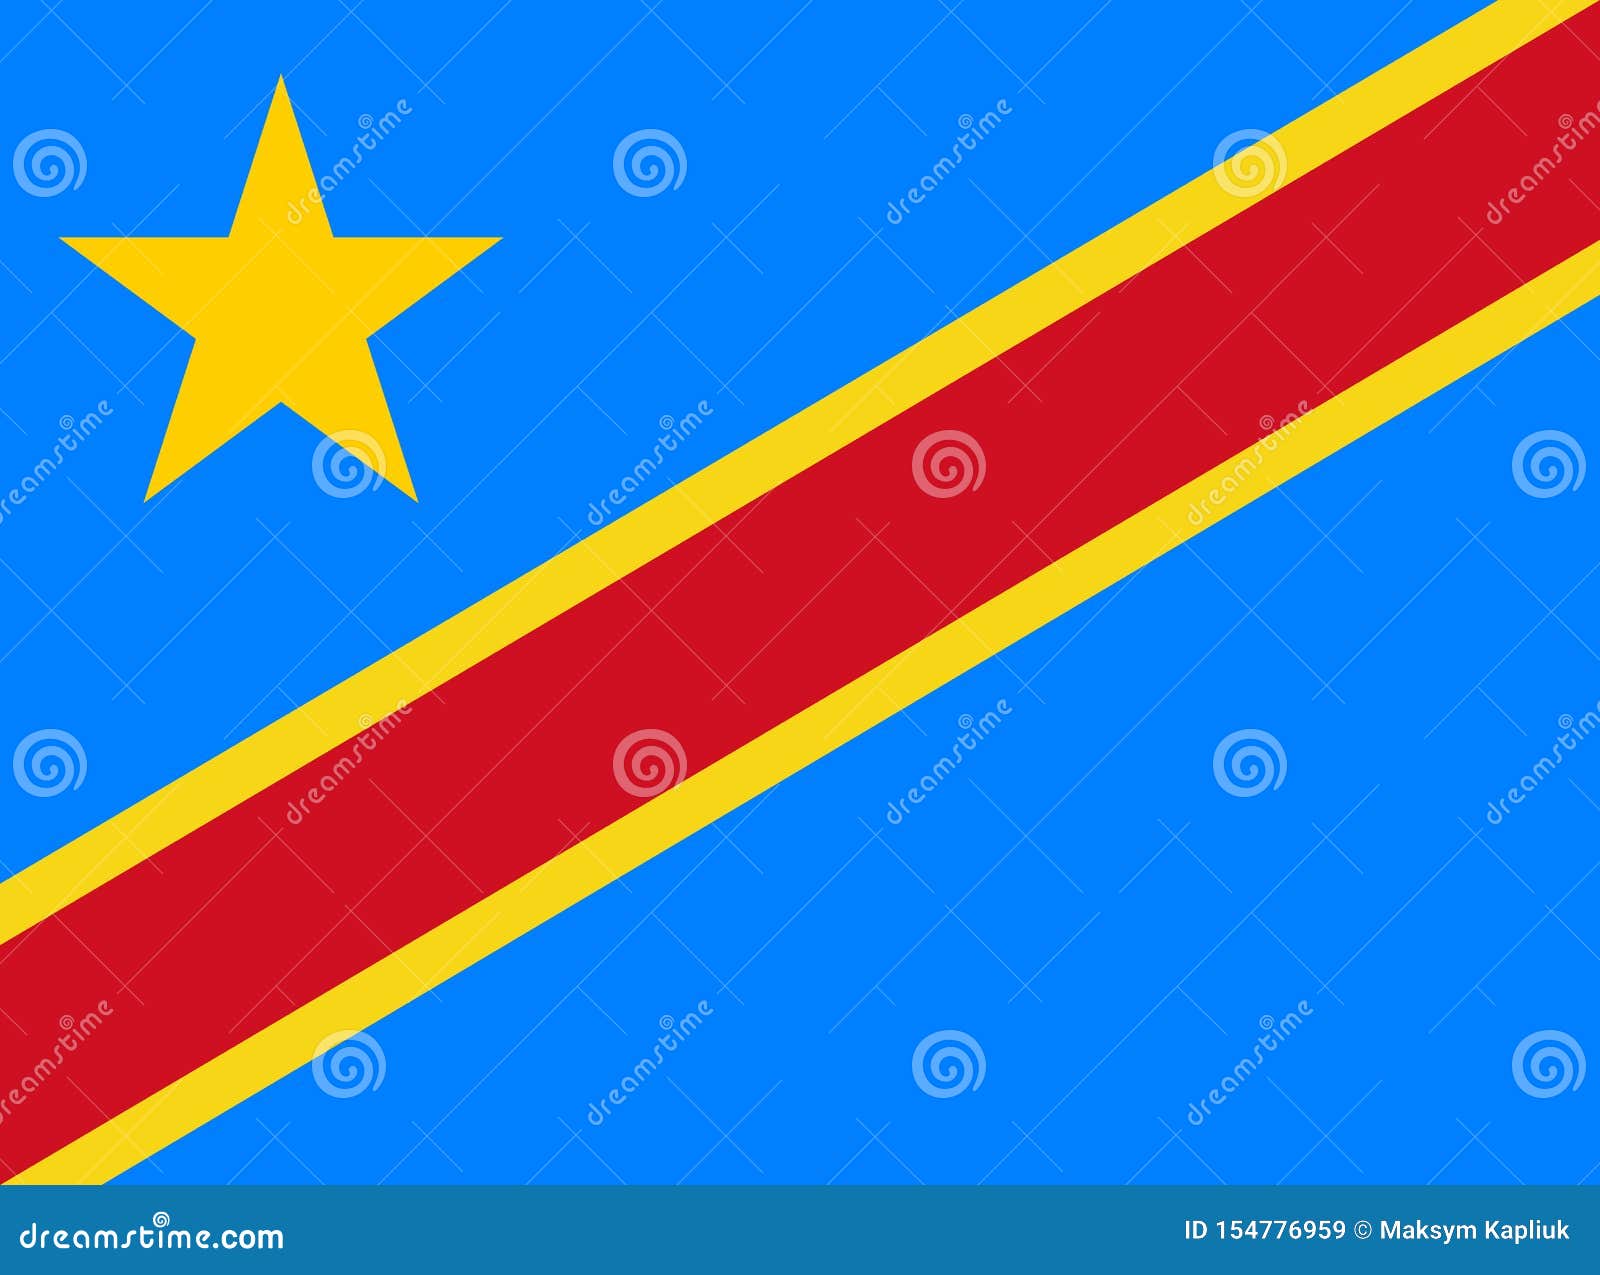 the democratic republic of the congo flag.  